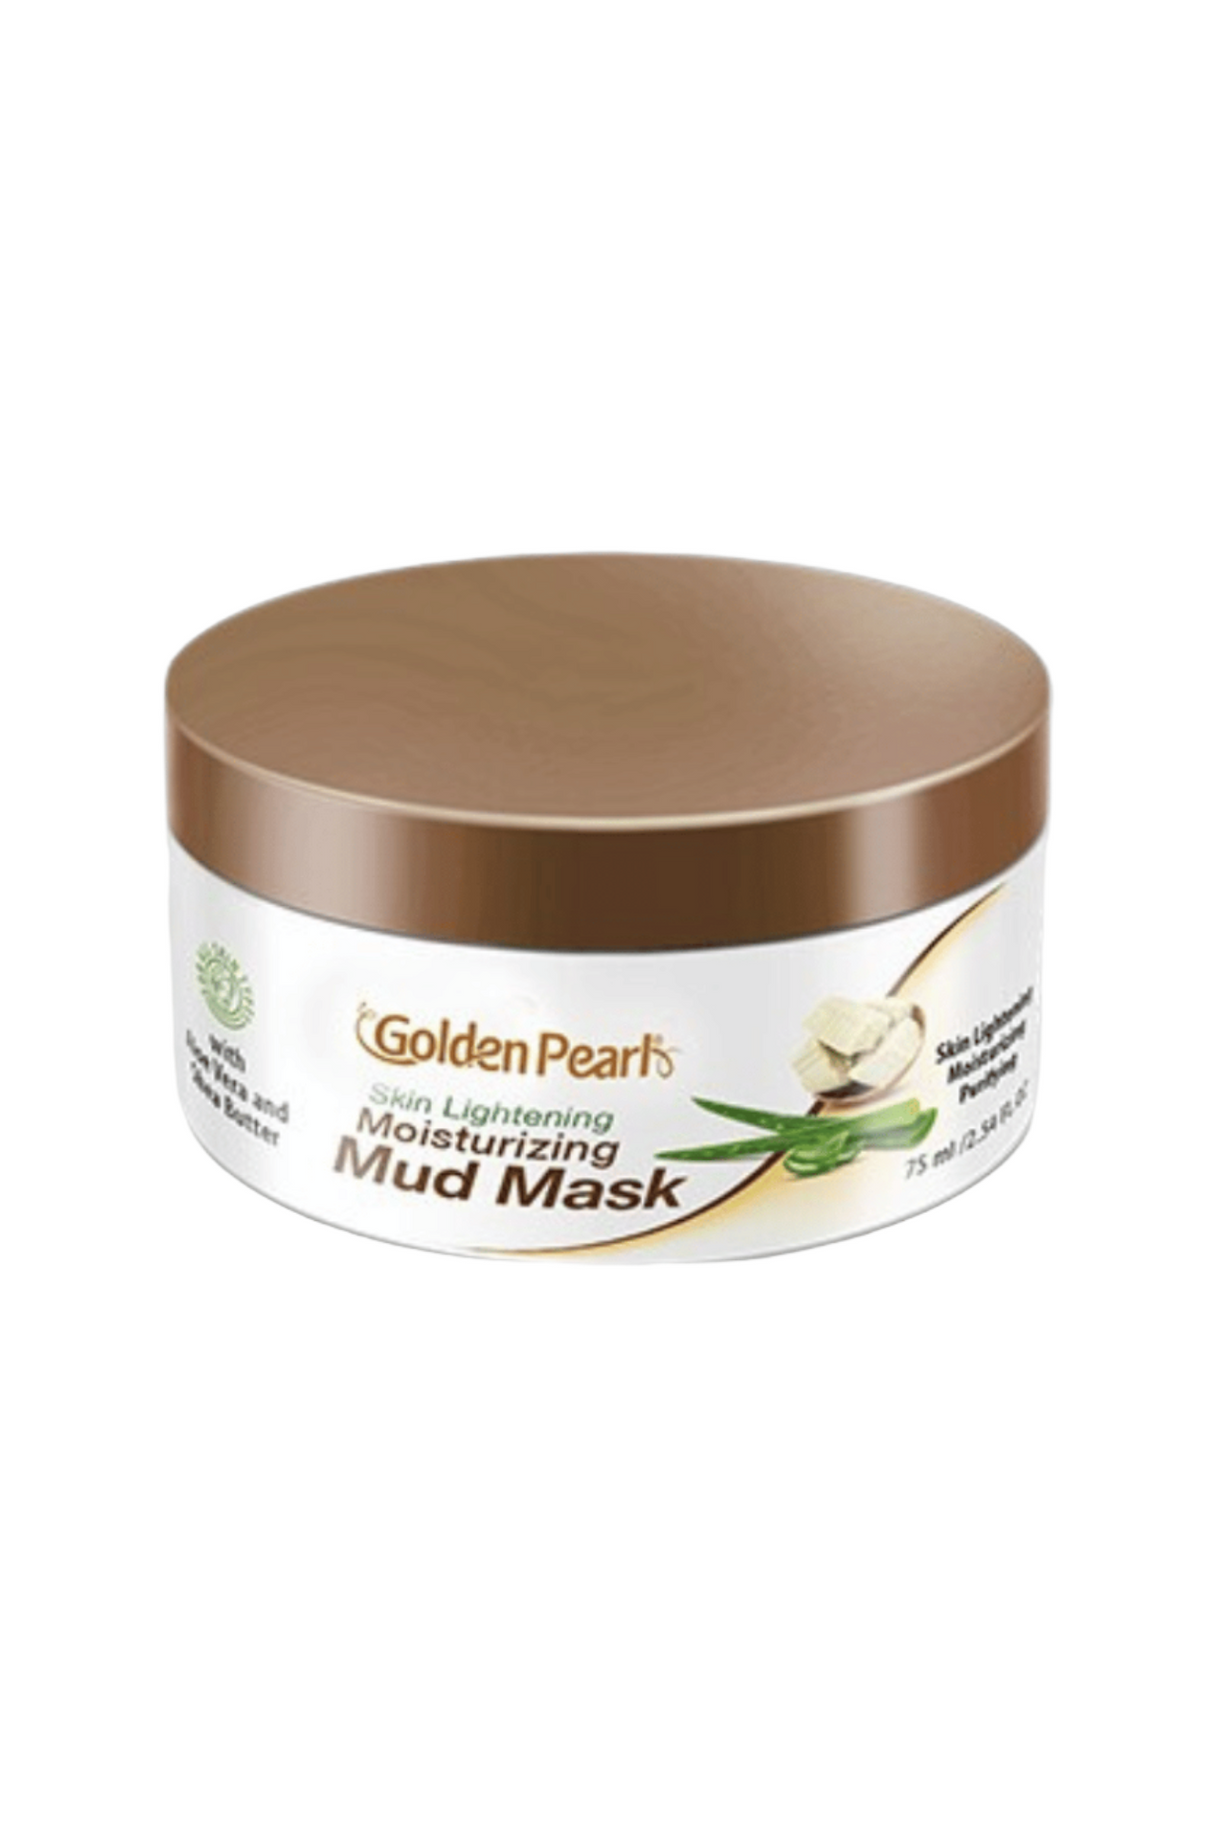 golden pearl mud mask moisturizing 75ml